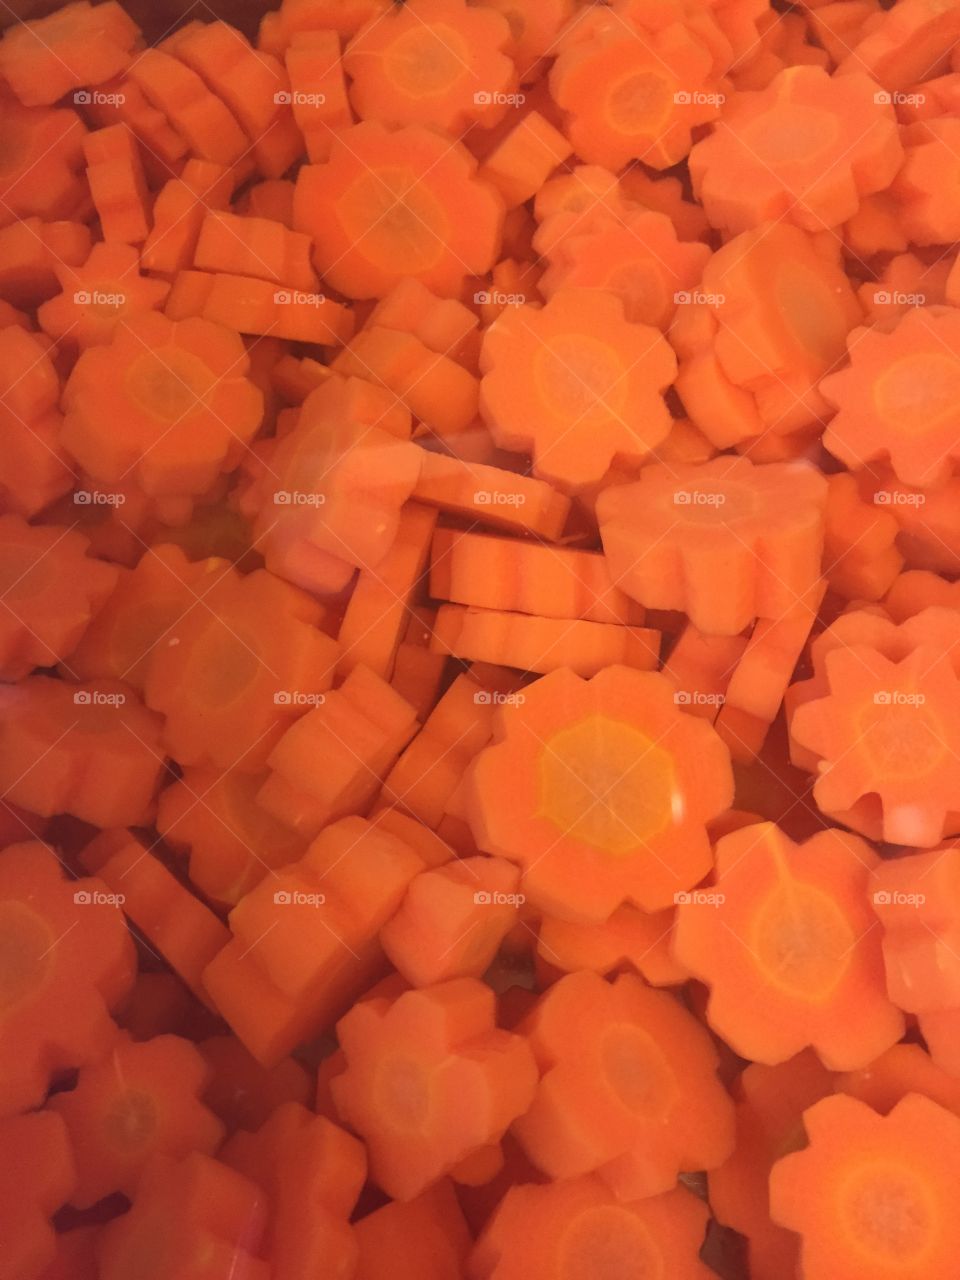 Carrots in bloom